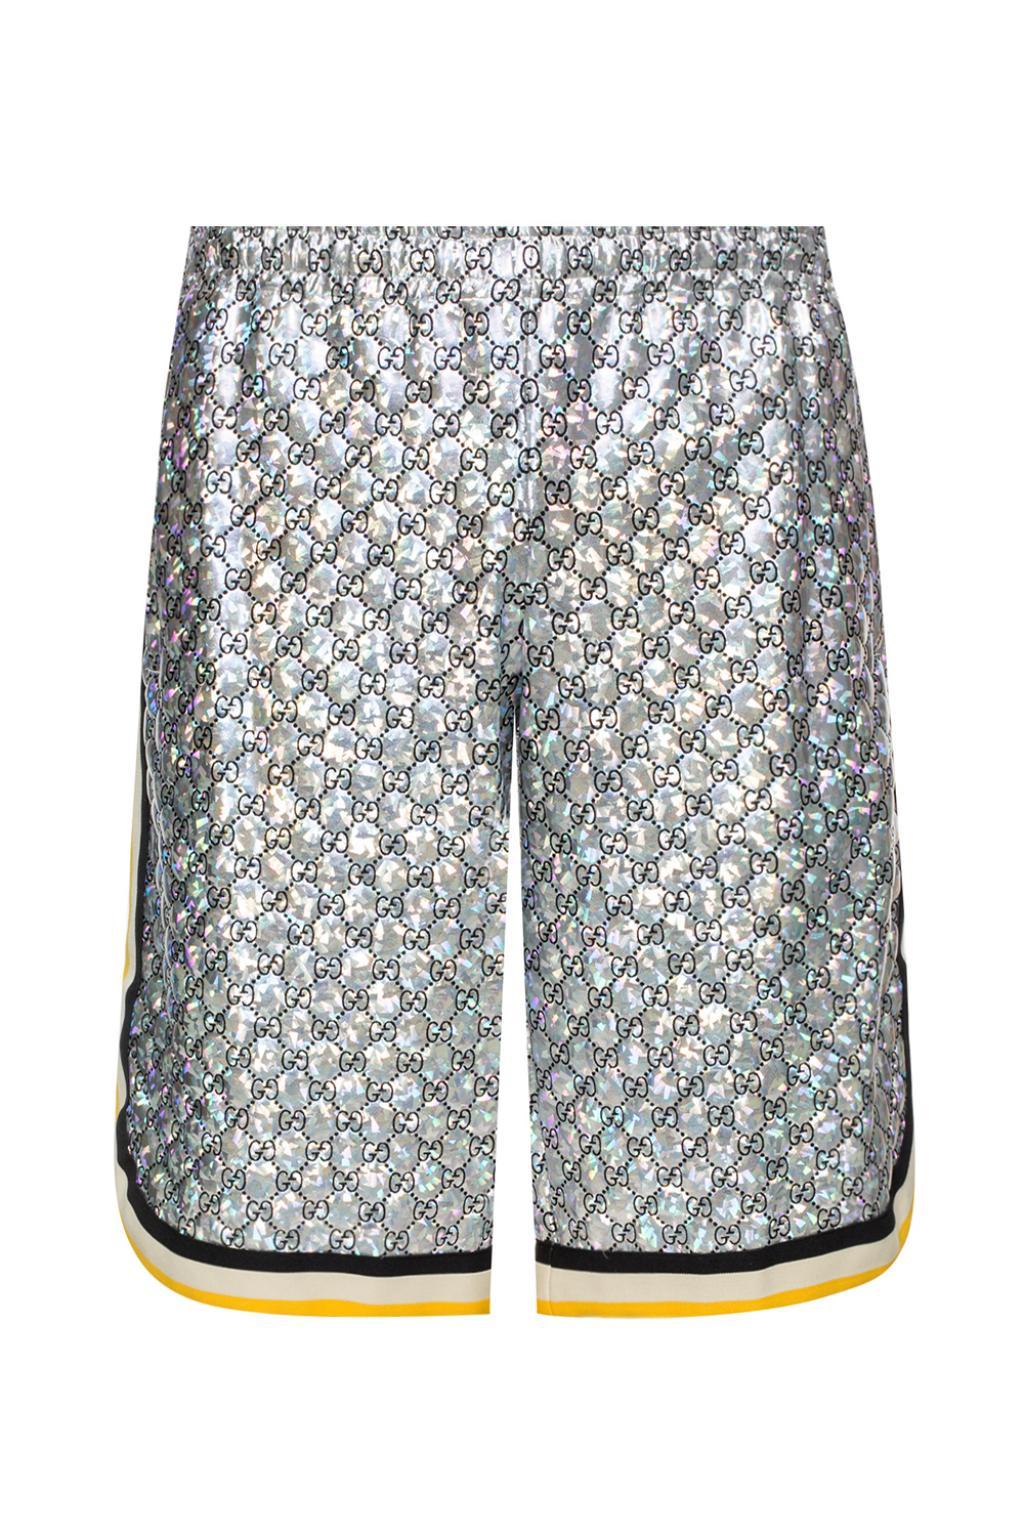 Gucci Logo Shorts in Metallic for Men | Lyst